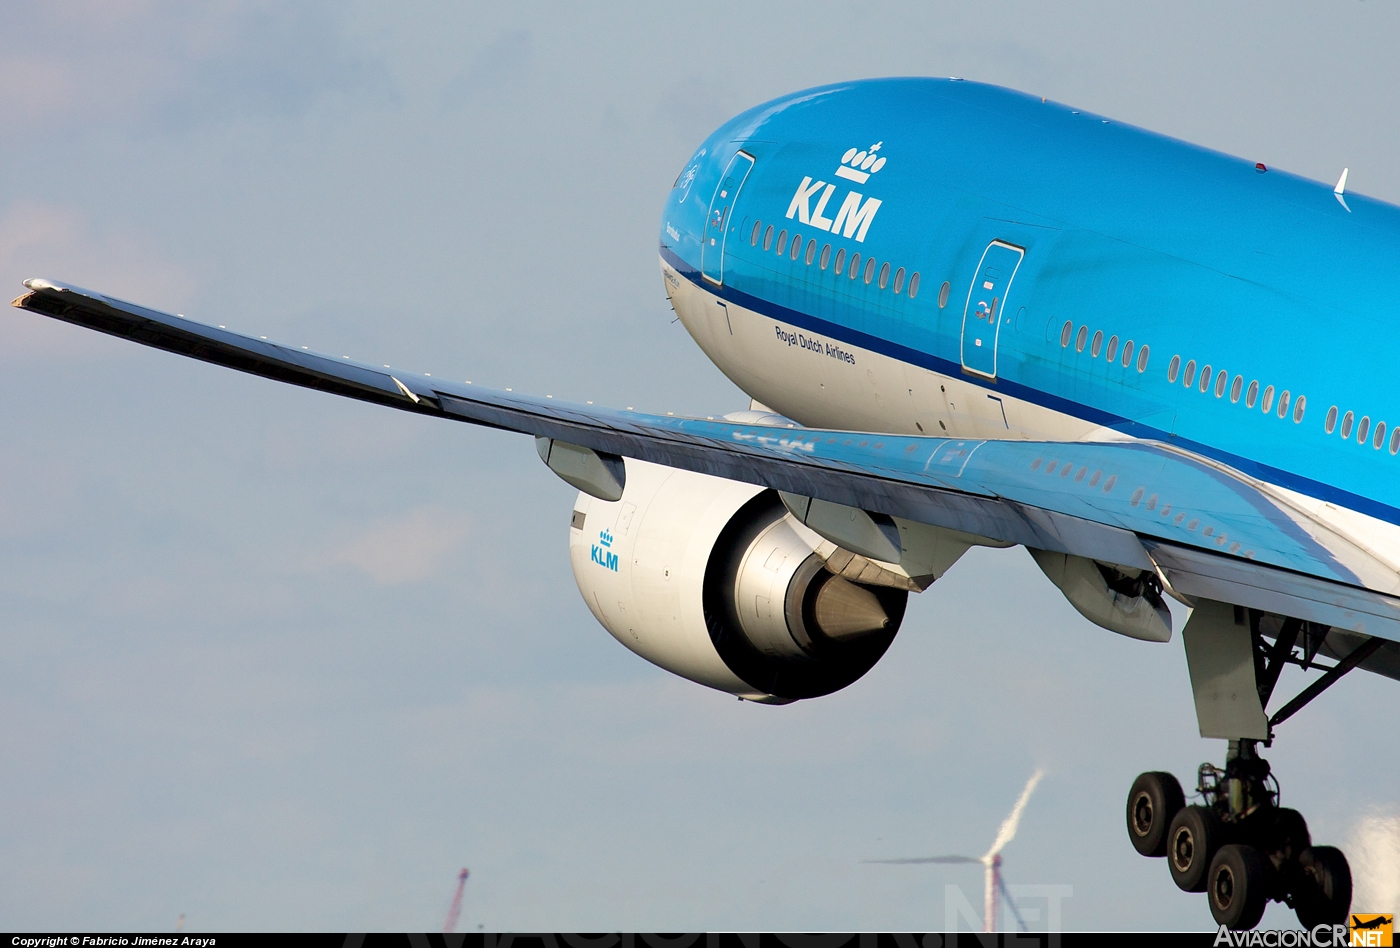 PH-BQB - Boeing 777-206/ER - KLM - Royal Dutch Airlines